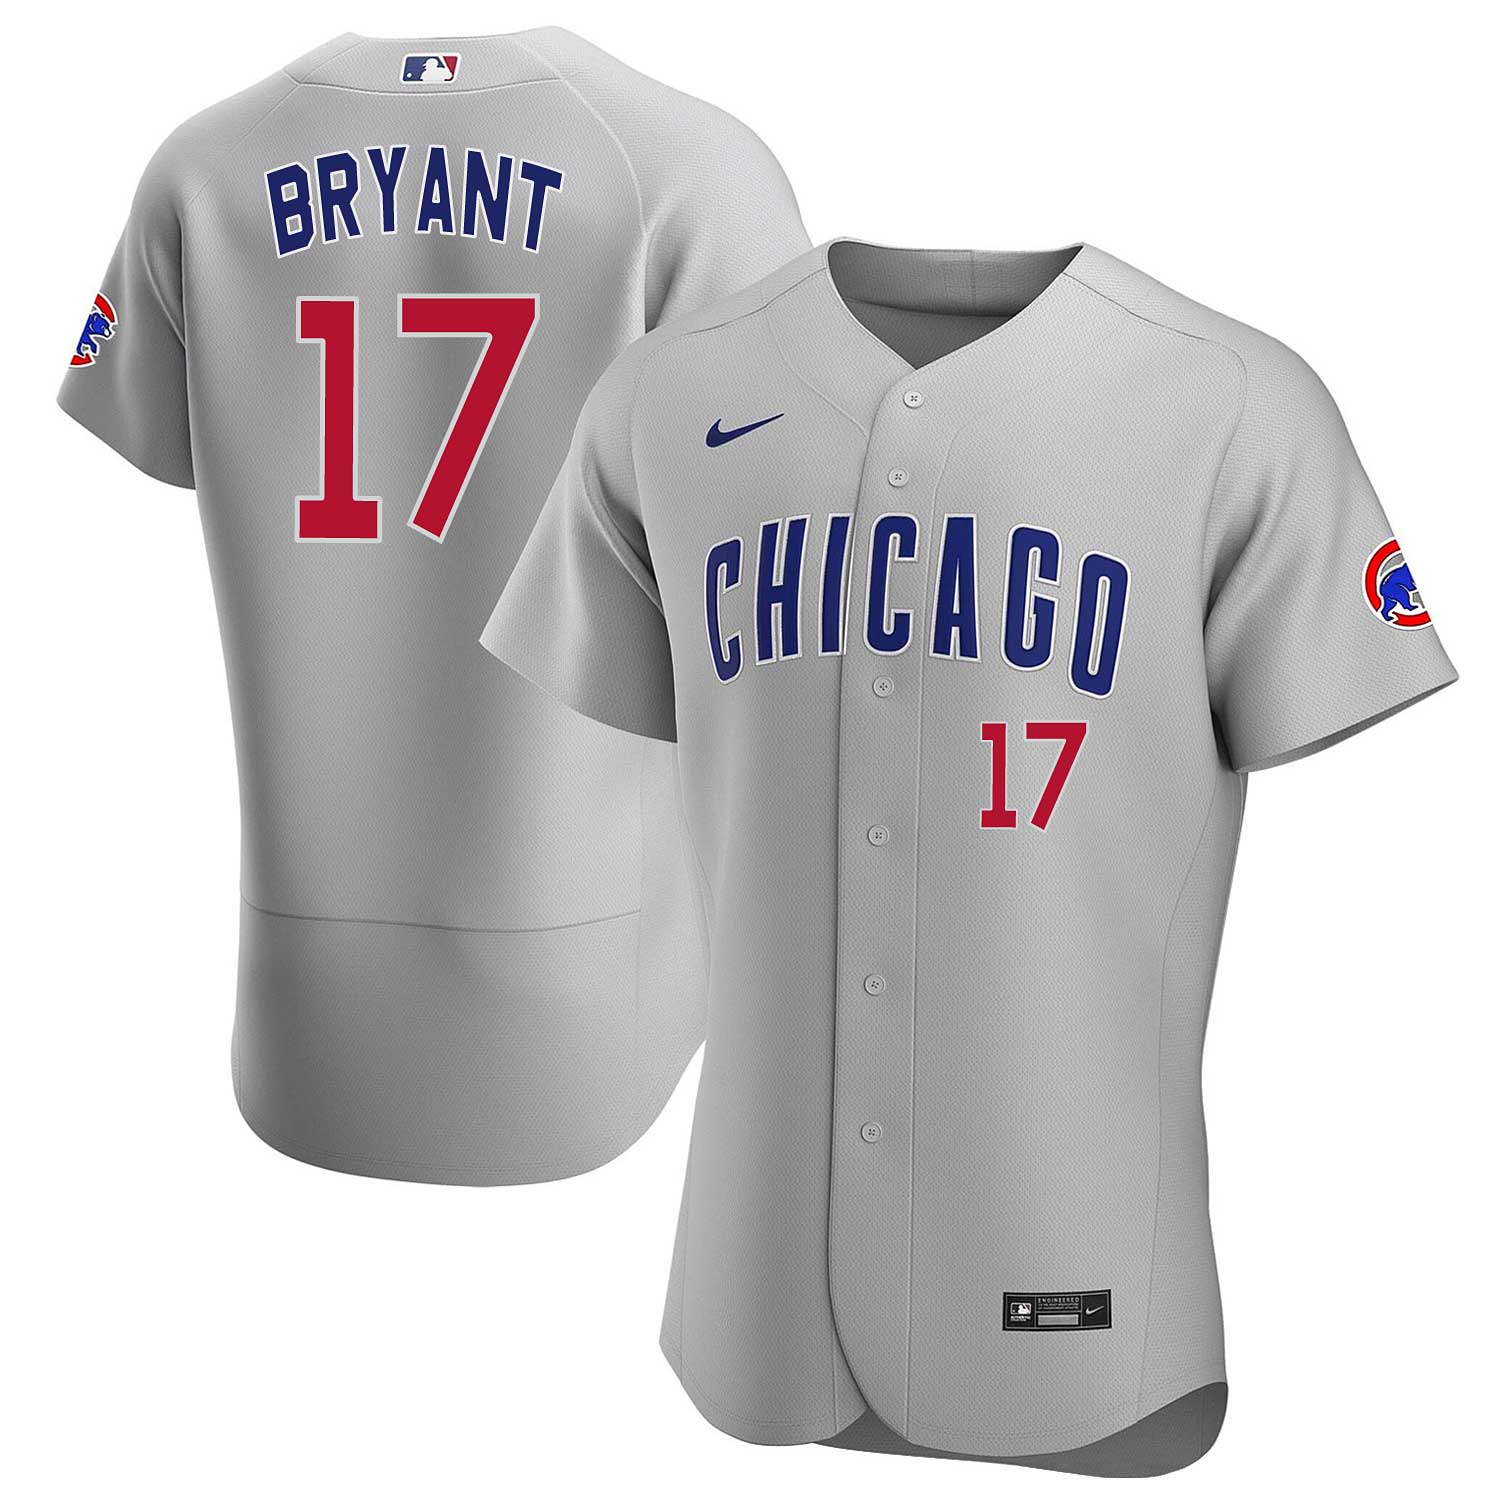 Price of winning: Cubs' Kris Bryant has top-selling MLB jersey